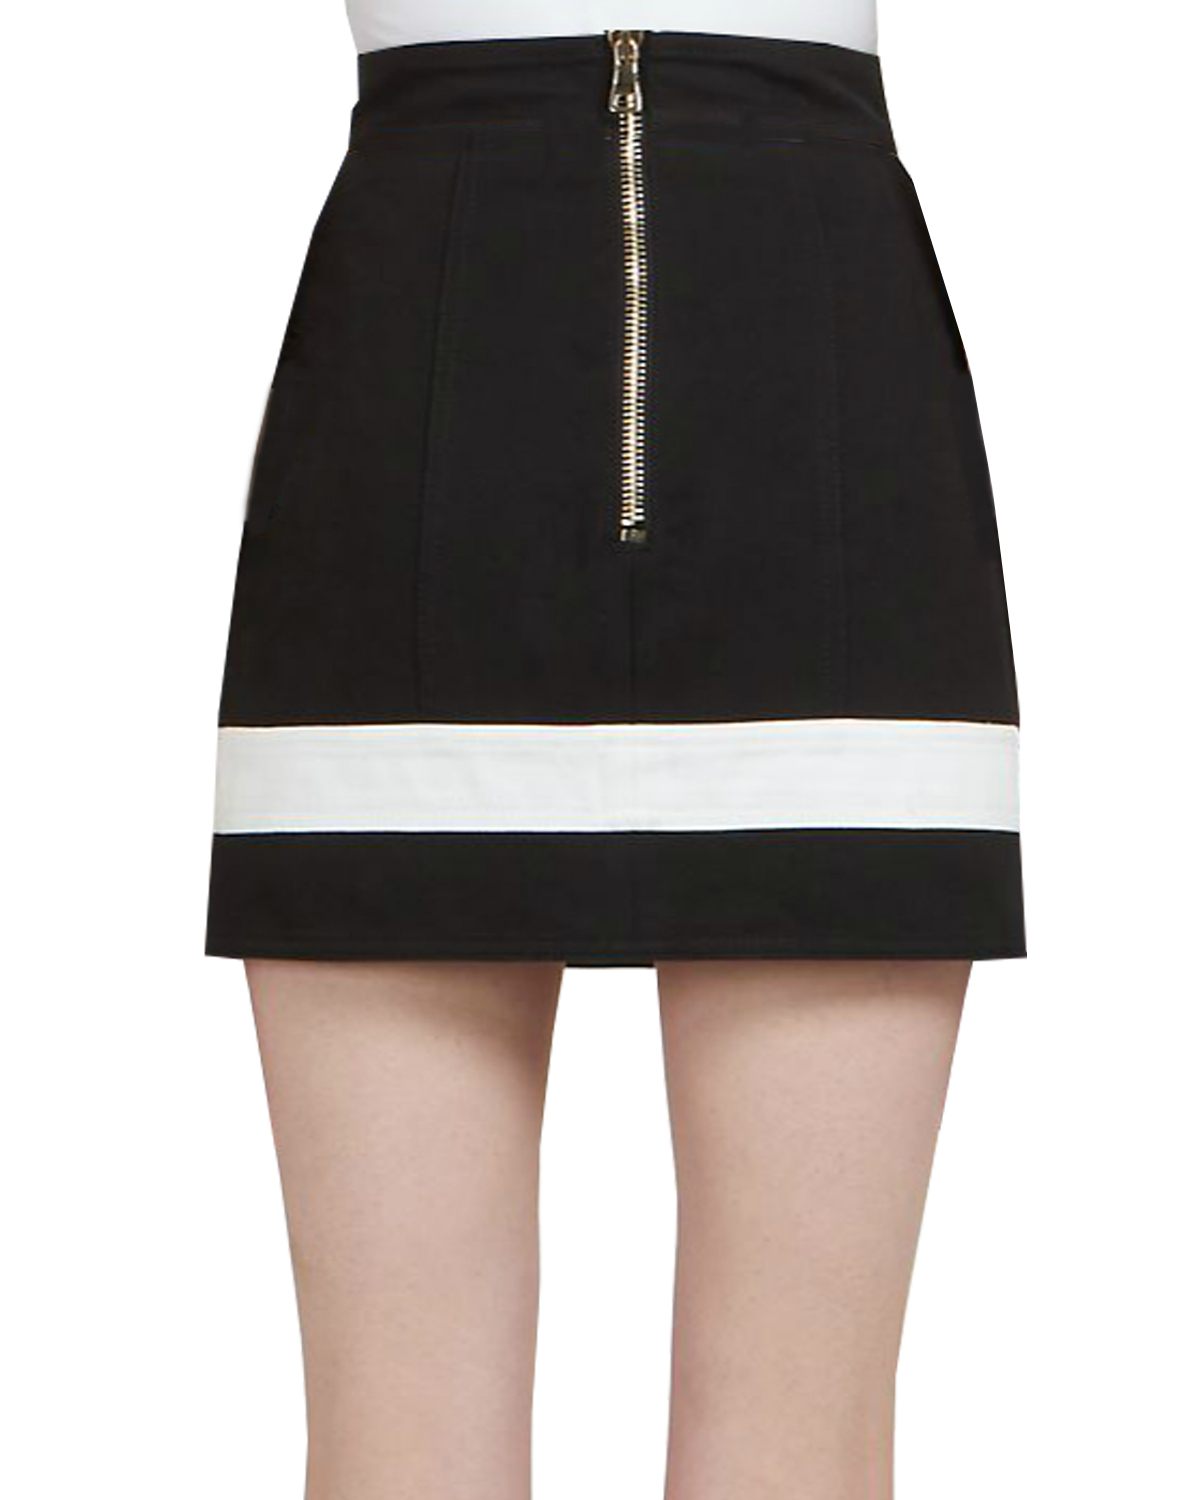 Black and White Border Mini Skirt